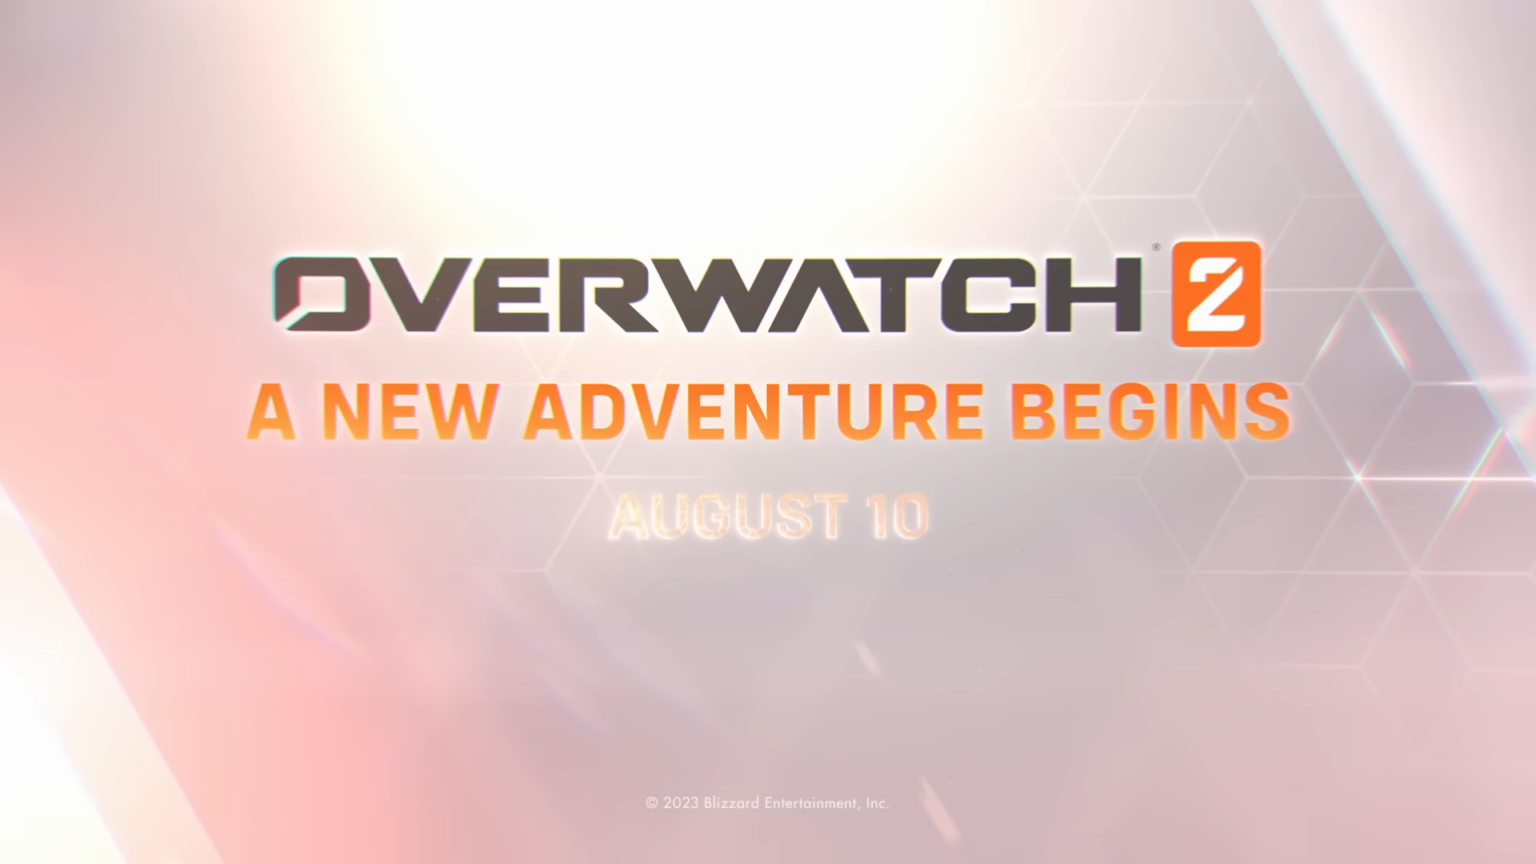 Overwatch 2 invasion release date